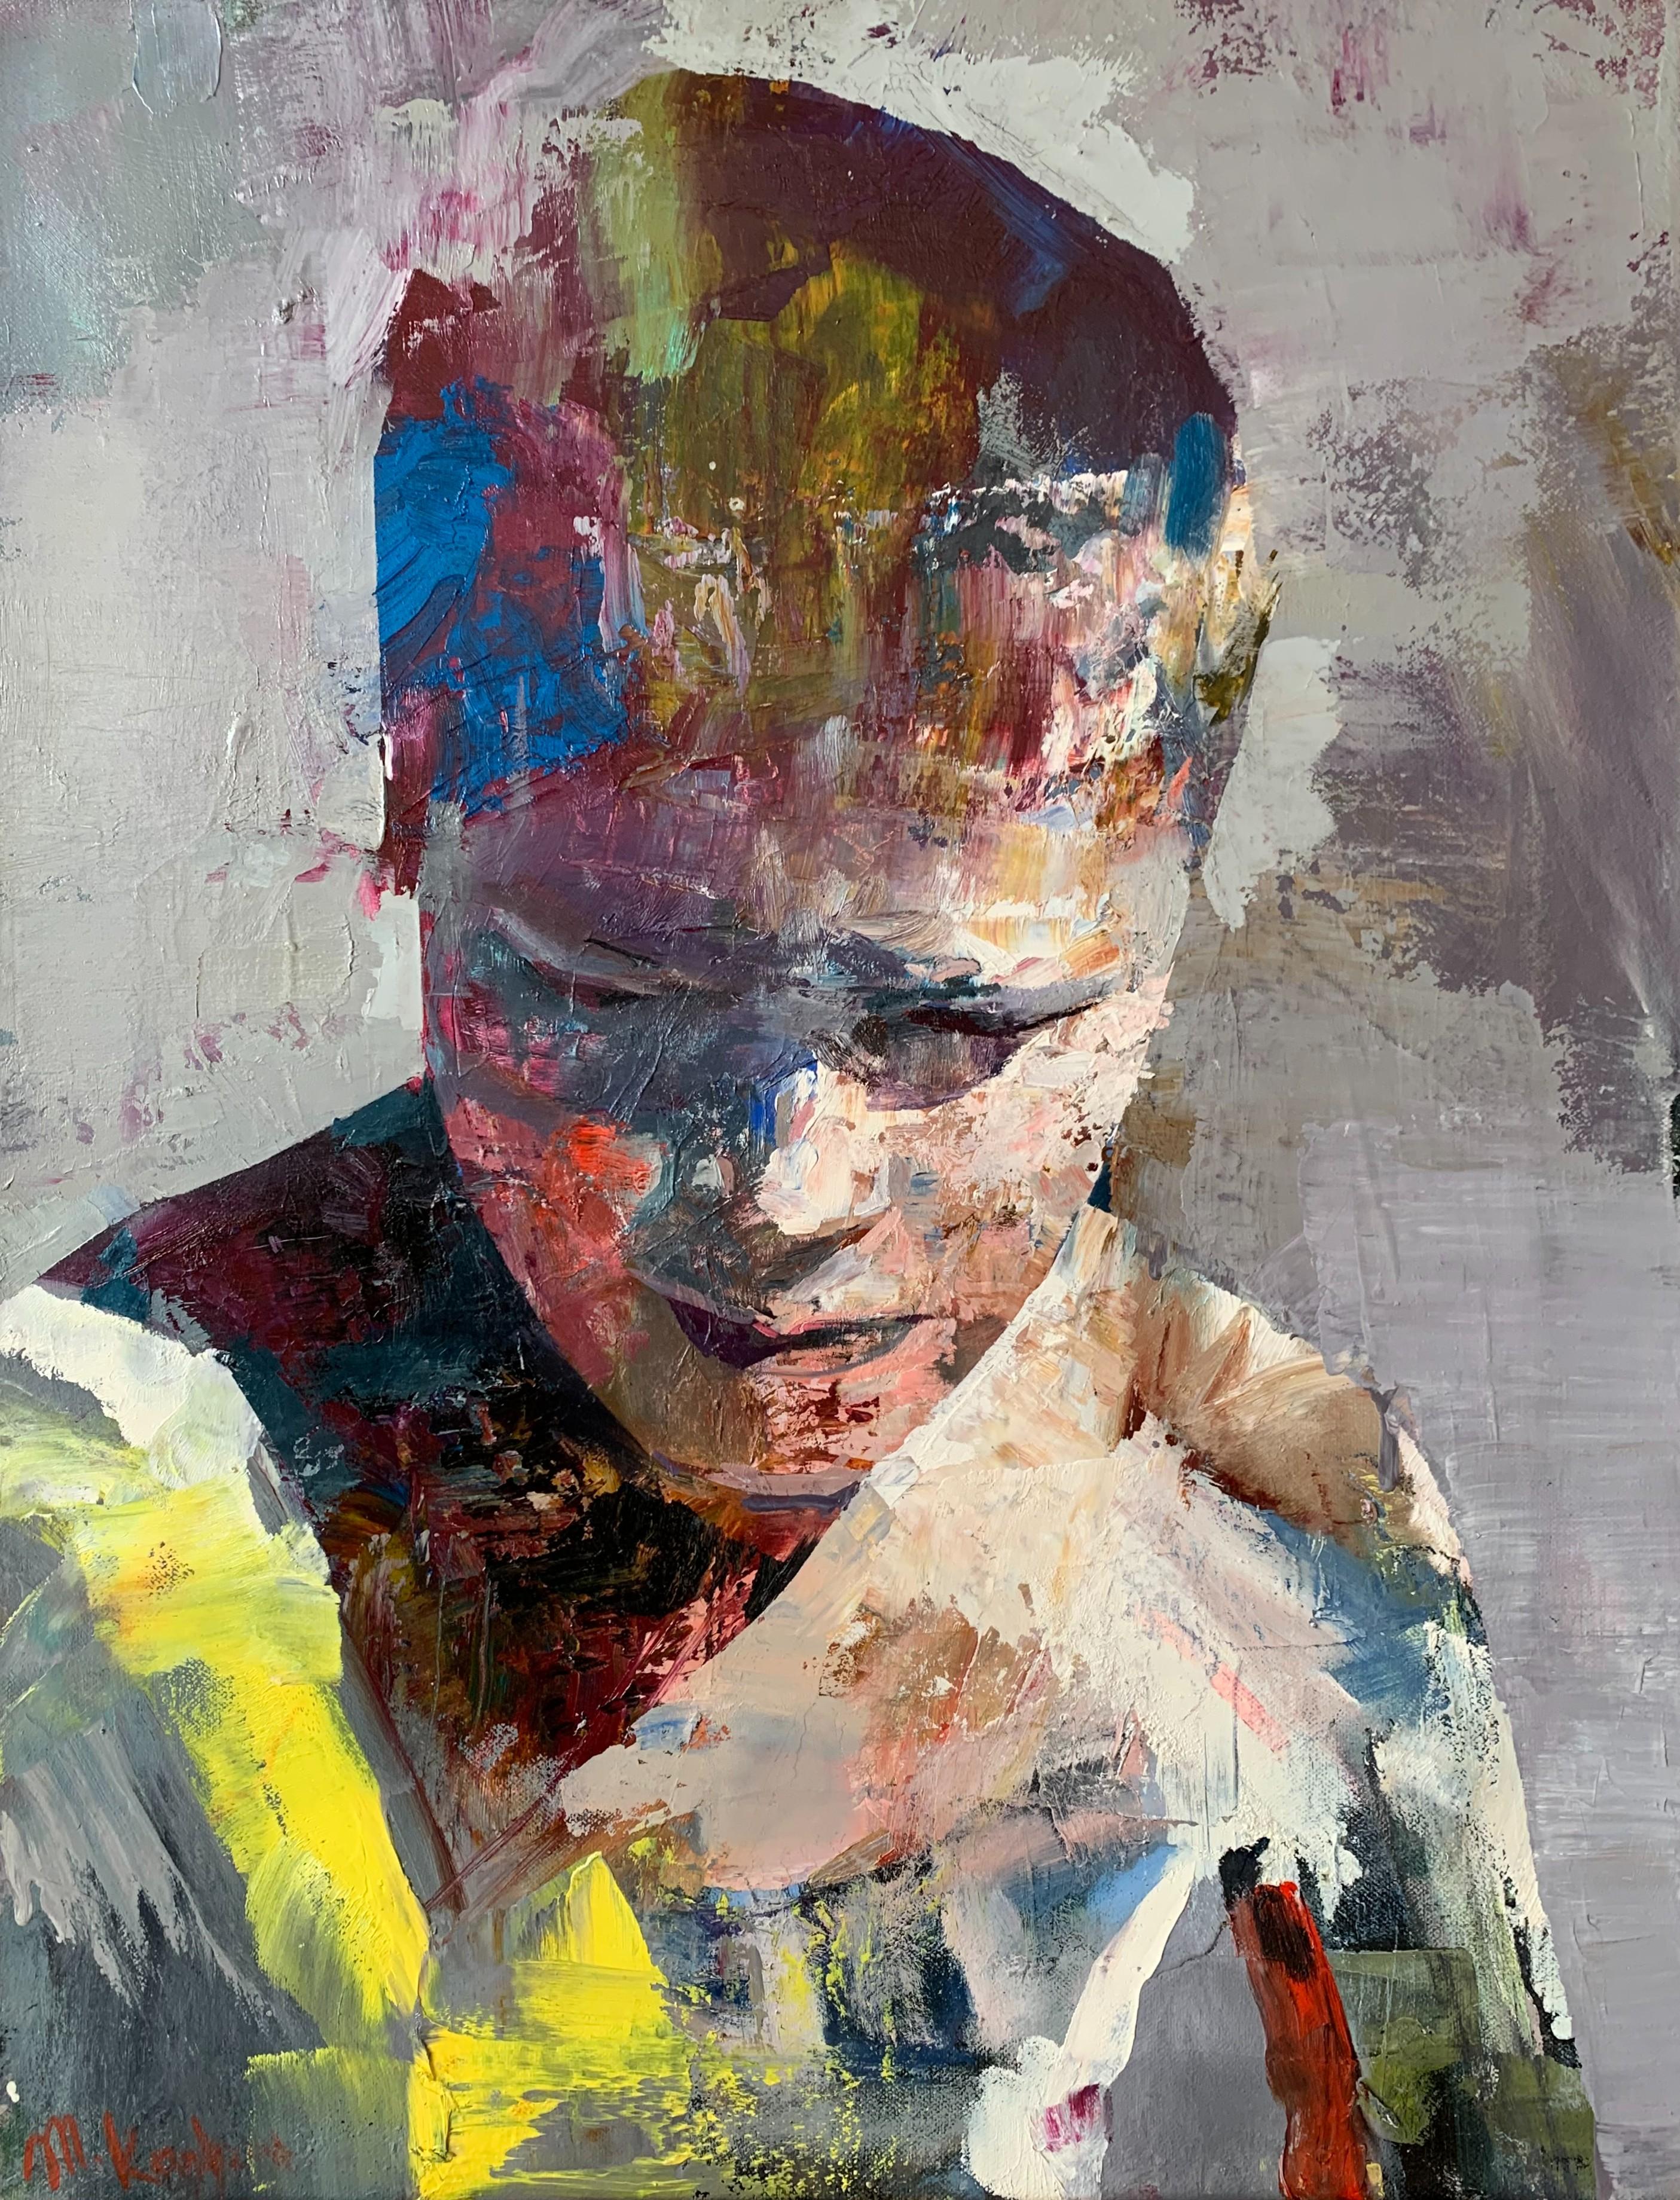 Tania Kandracienka Portrait Painting - A Boy - Contemporary European Art, Oil on Canvas Painting, Colorful, Figurative